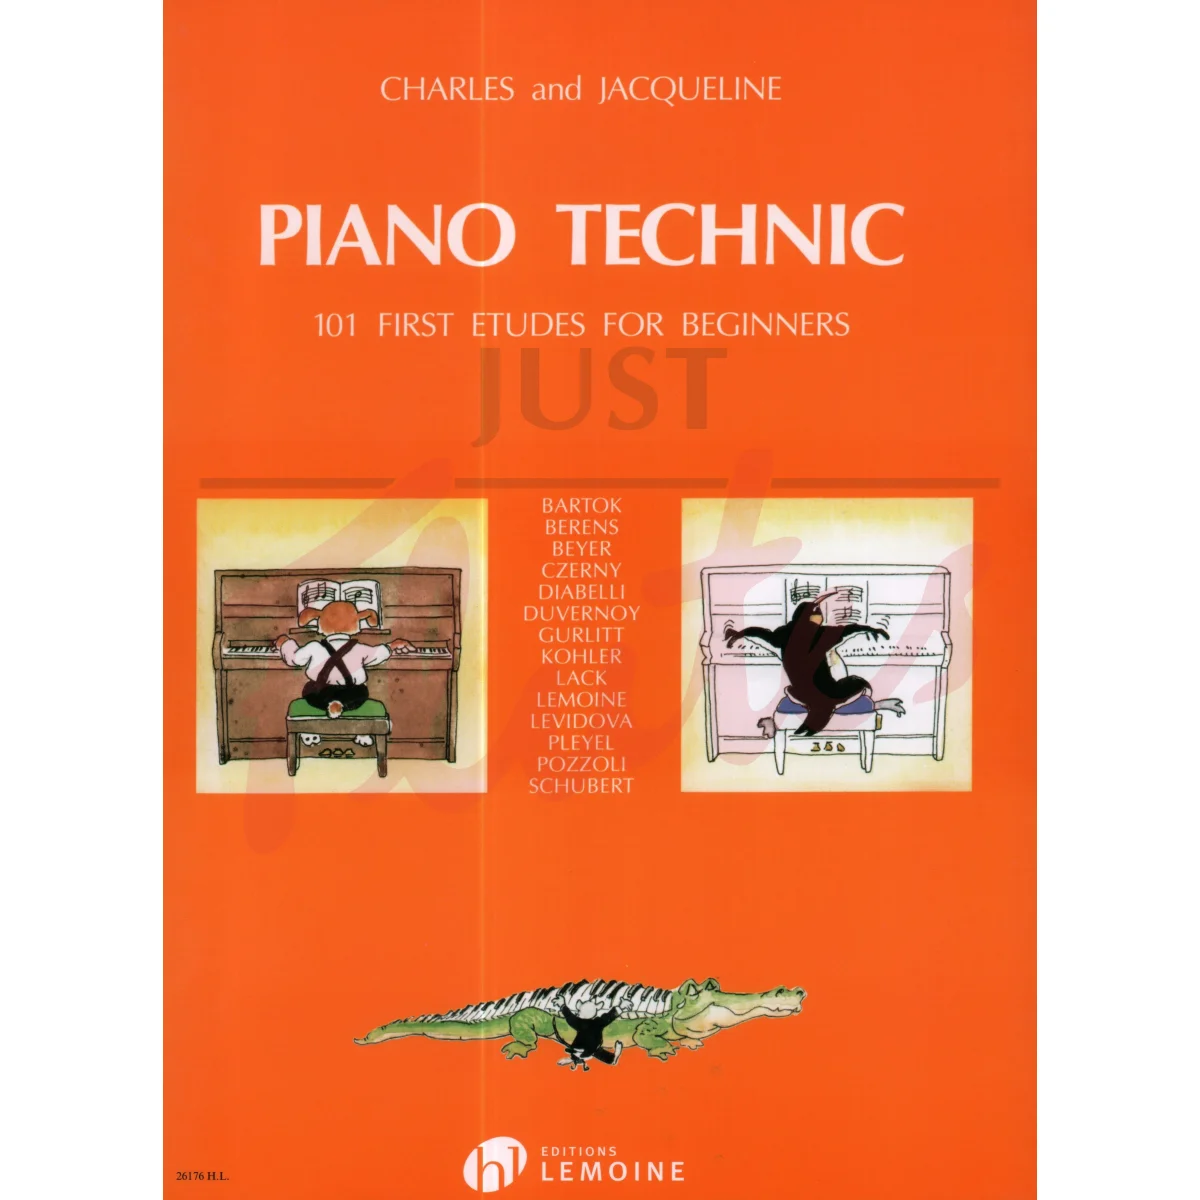 Piano Technic: 101 Studies for Beginners